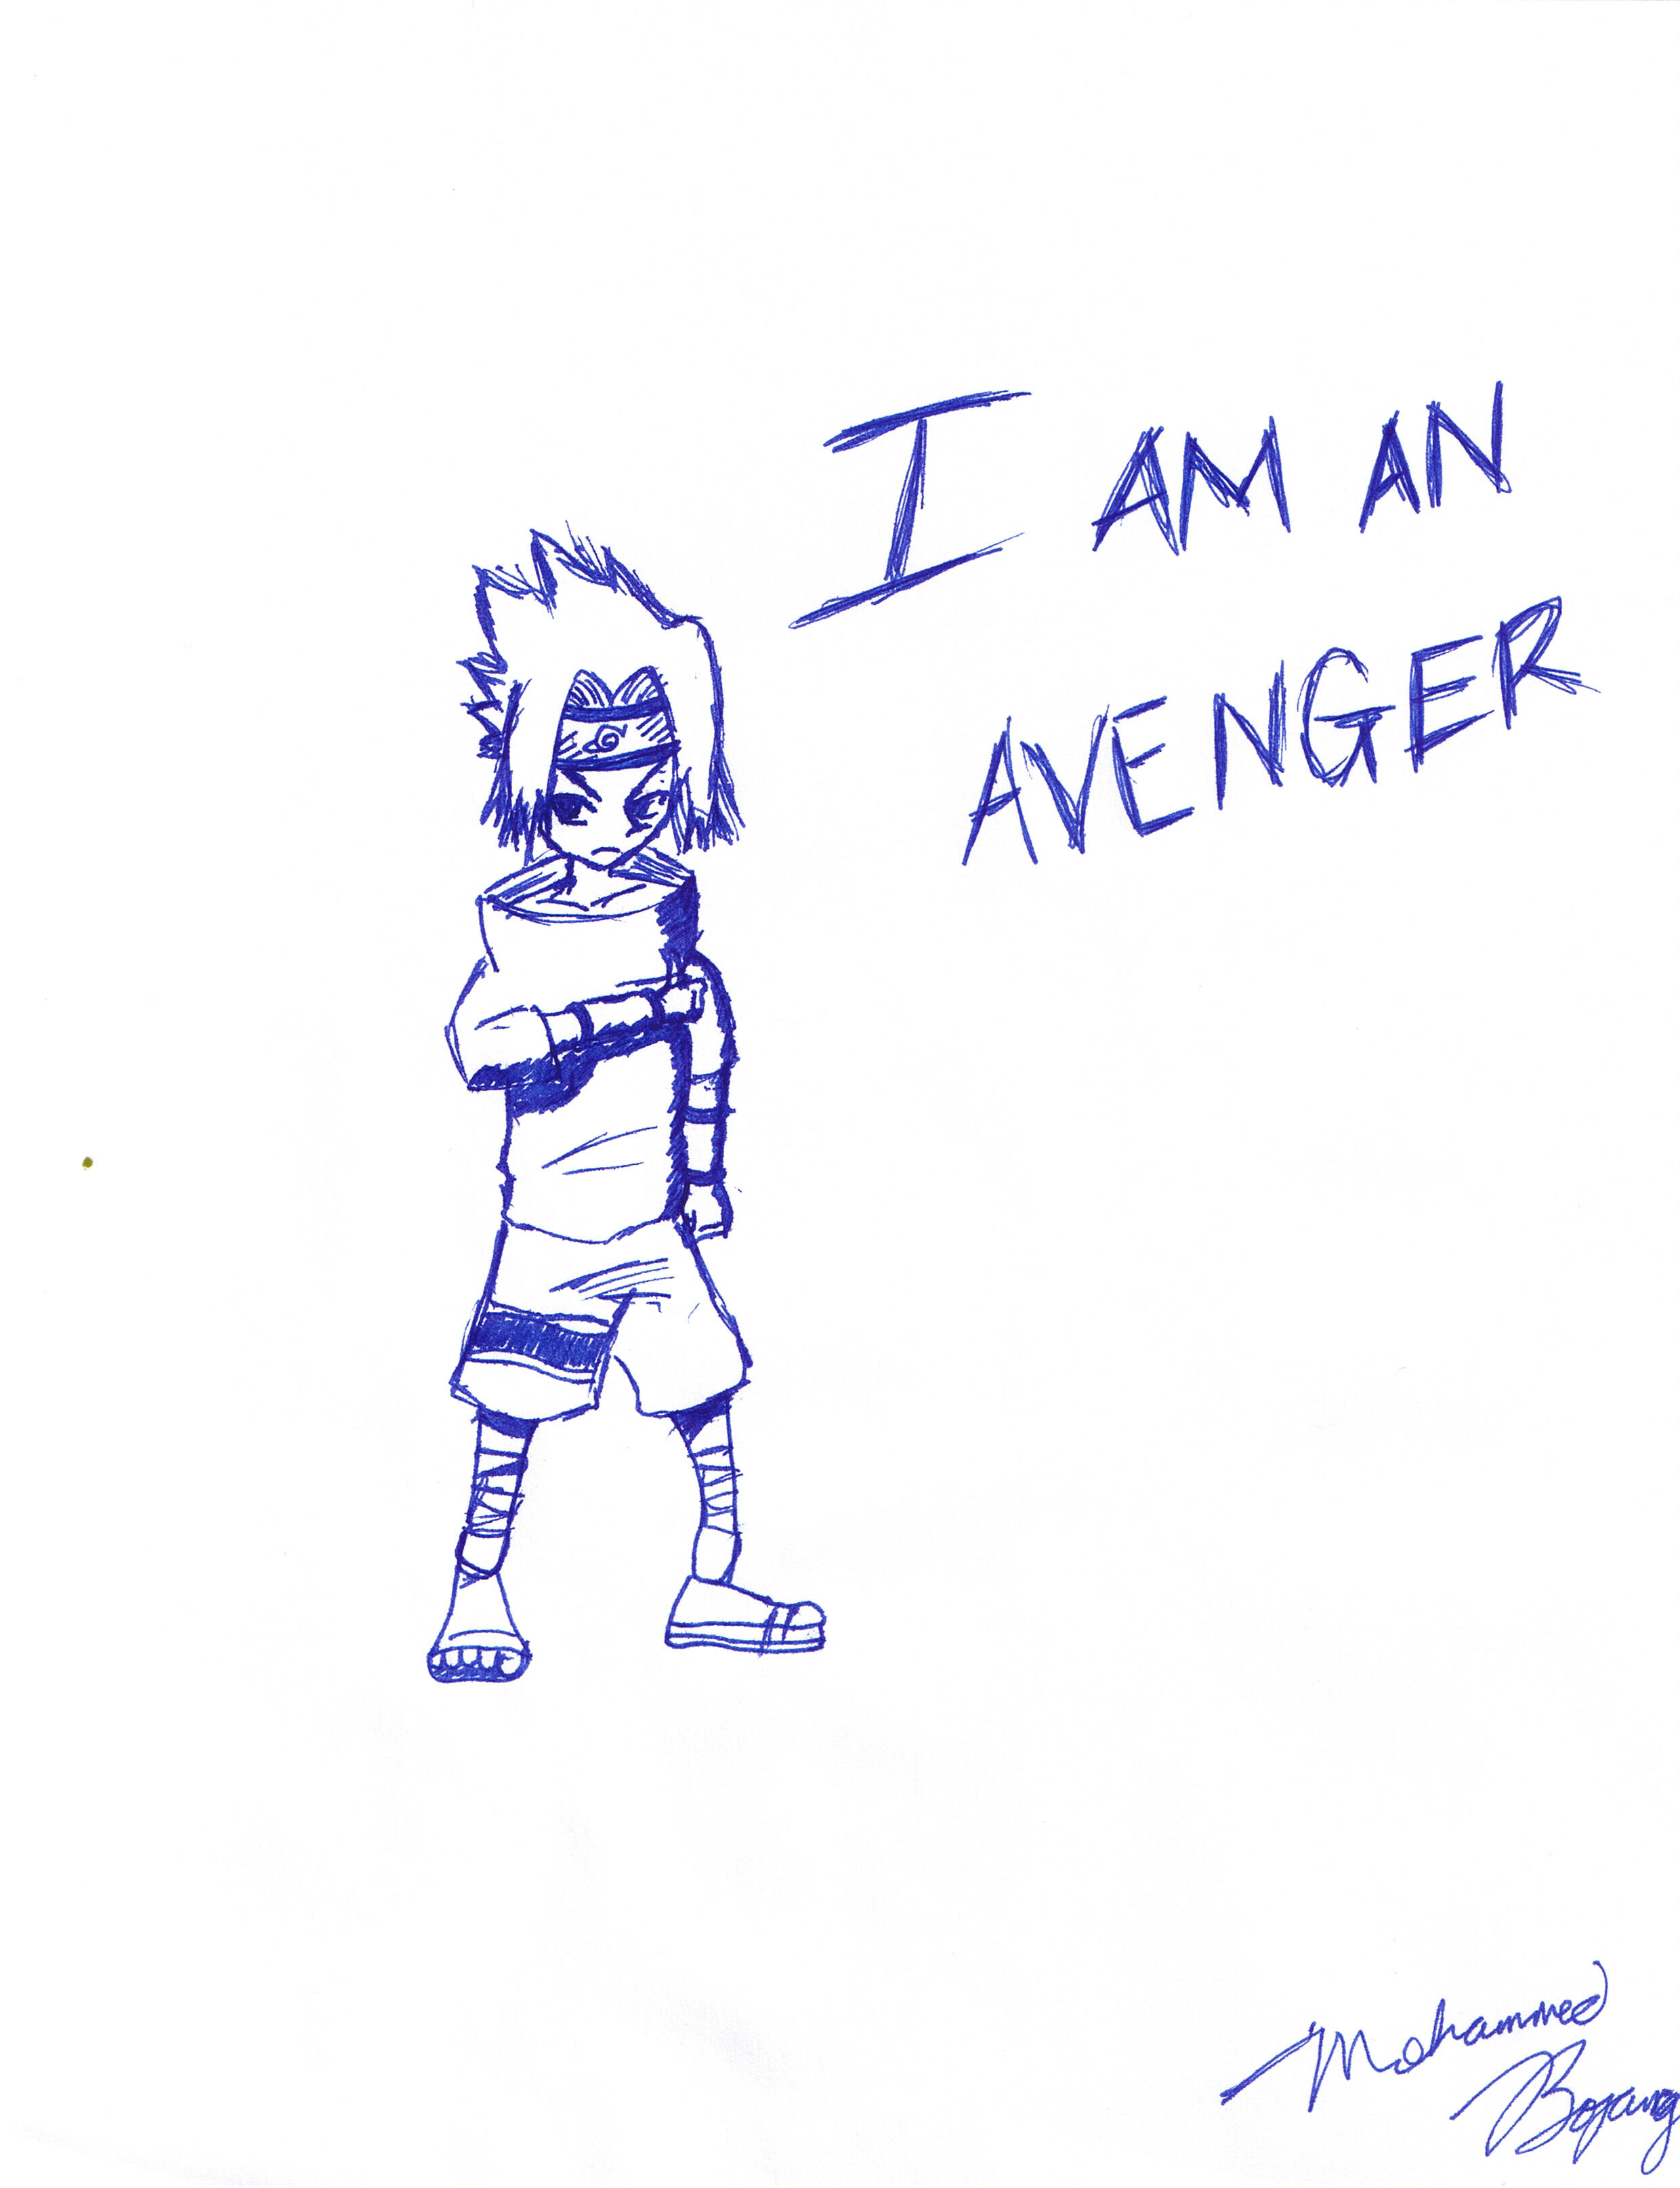 I'm an Avenger by animelover2007